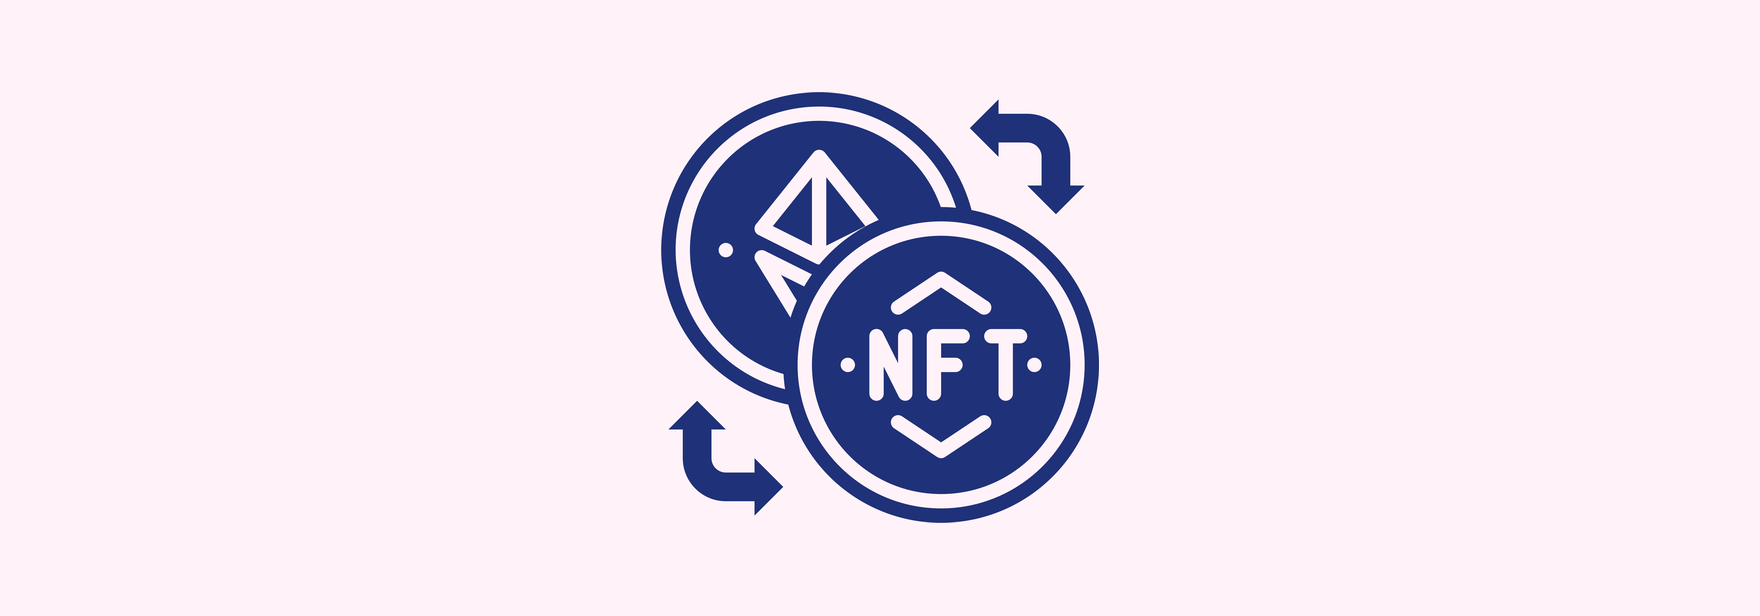 Революция в мире NFT: как АММ меняет подход к маркетплейсам